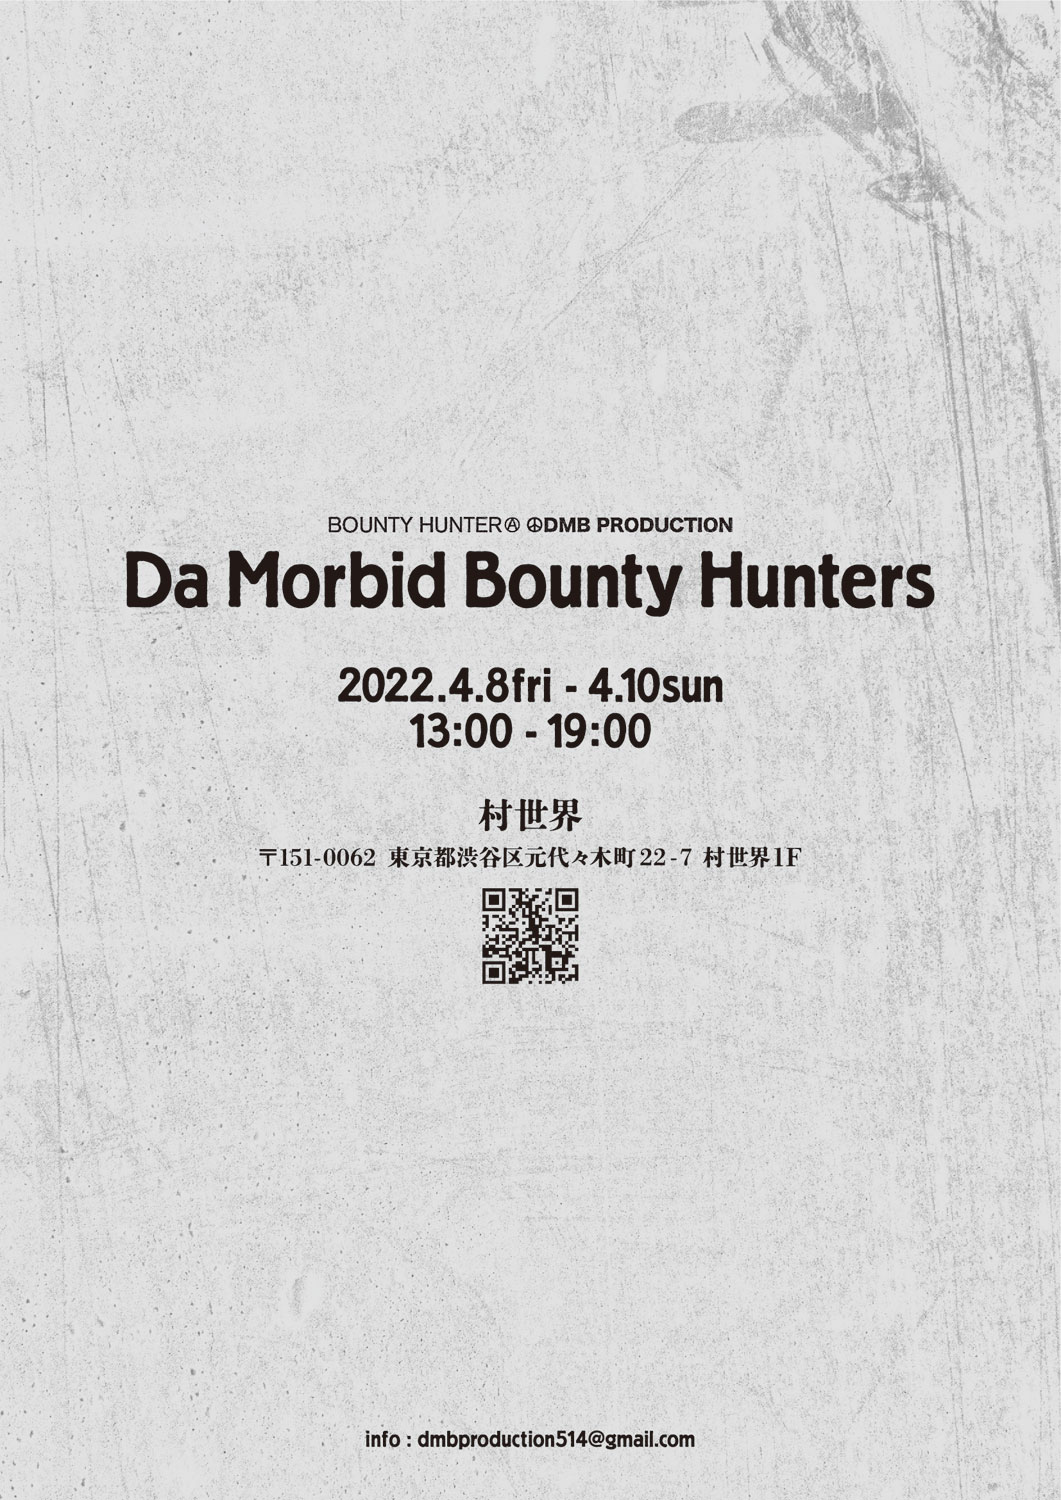 BOUNTY HUNTER & DMB PRODUCTION presents "Da Morbid Bounty Hunters"